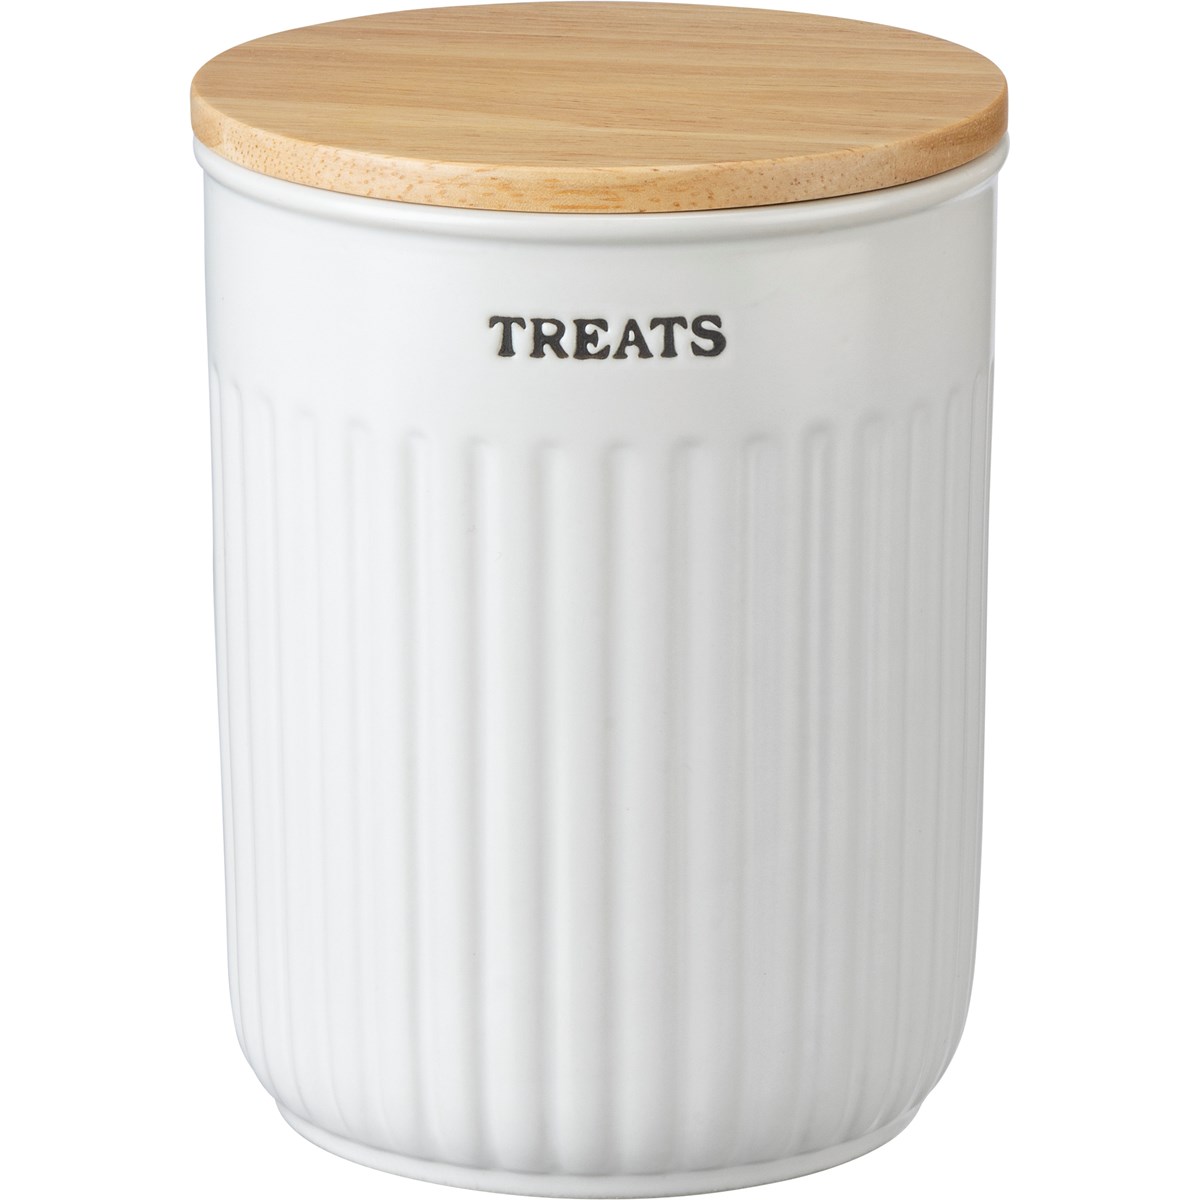 Treats Canister - Stoneware, Wood, Plastic